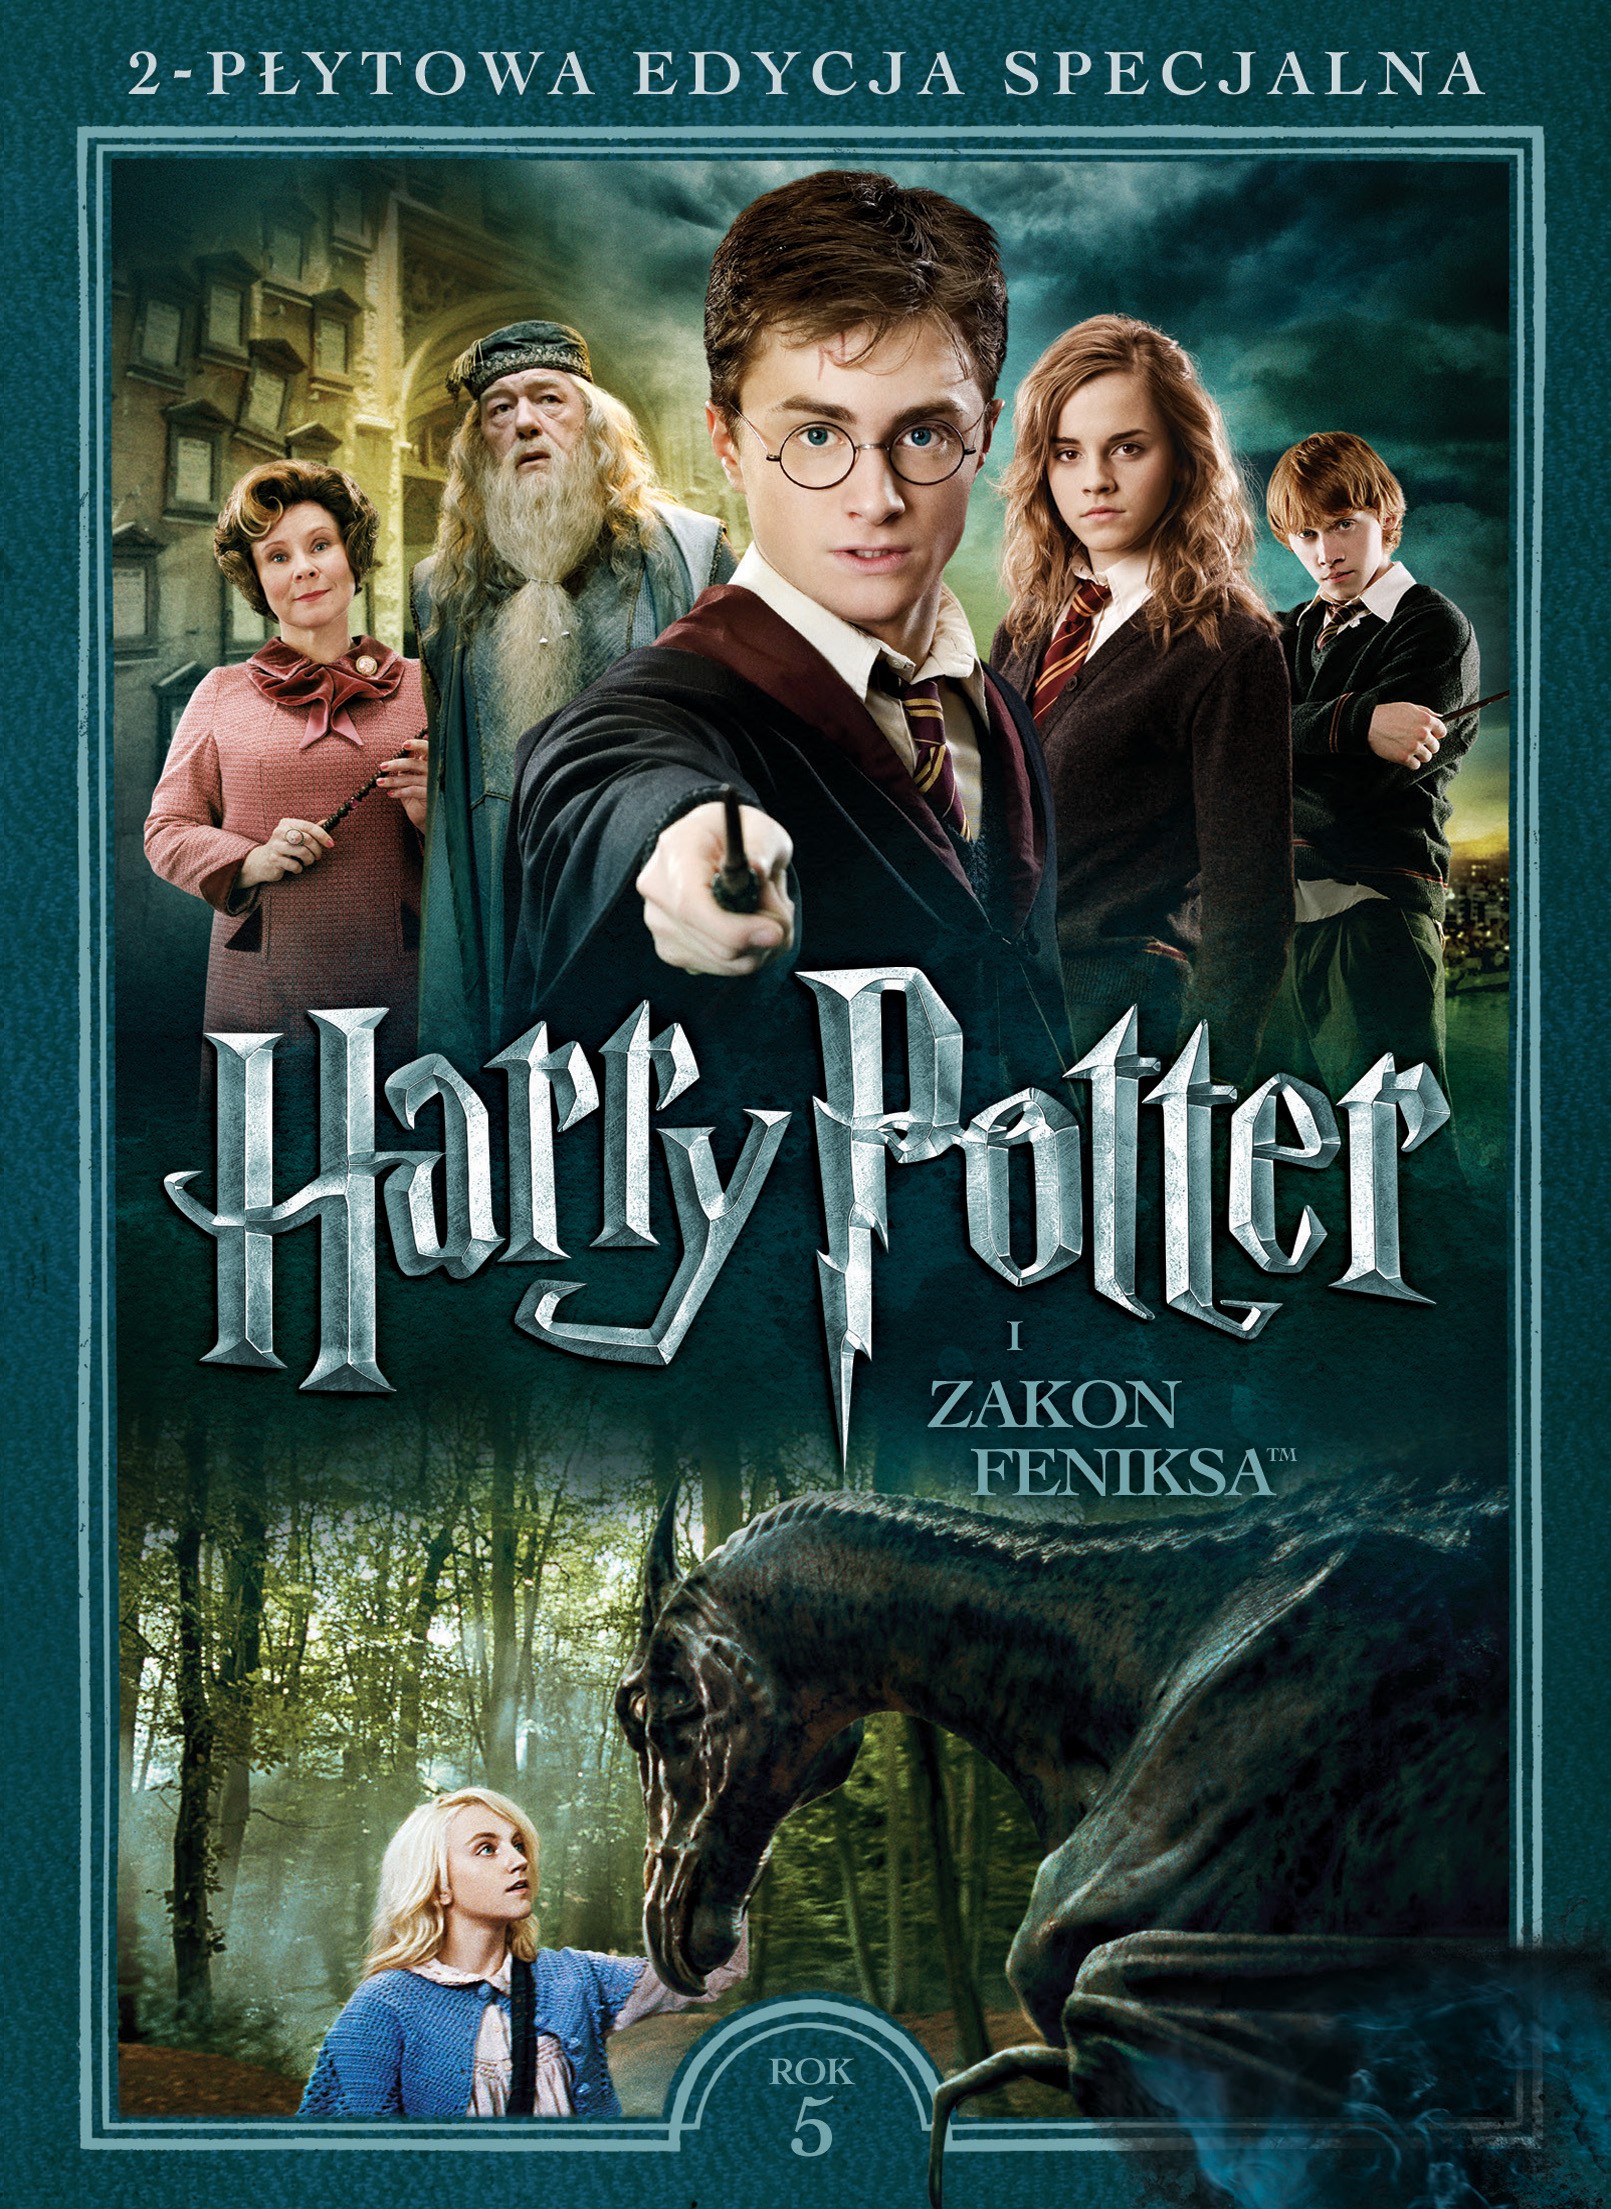 _pressroom_materialy_0_Harry_Potter5_DVD_2D.jpg